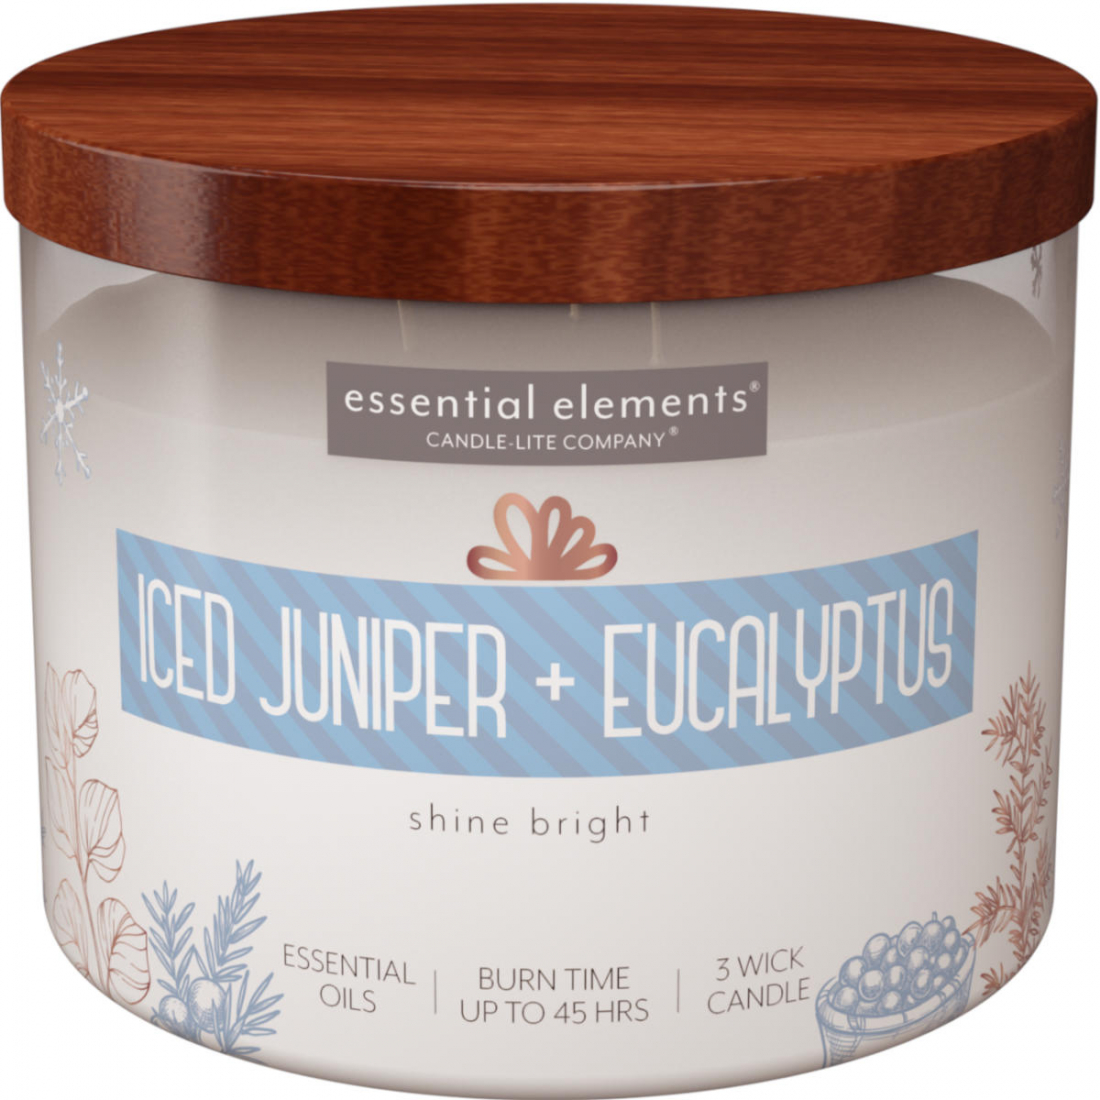 'Iced Juniper & Eucalyptus' 3 Wicks Candle - 418 g